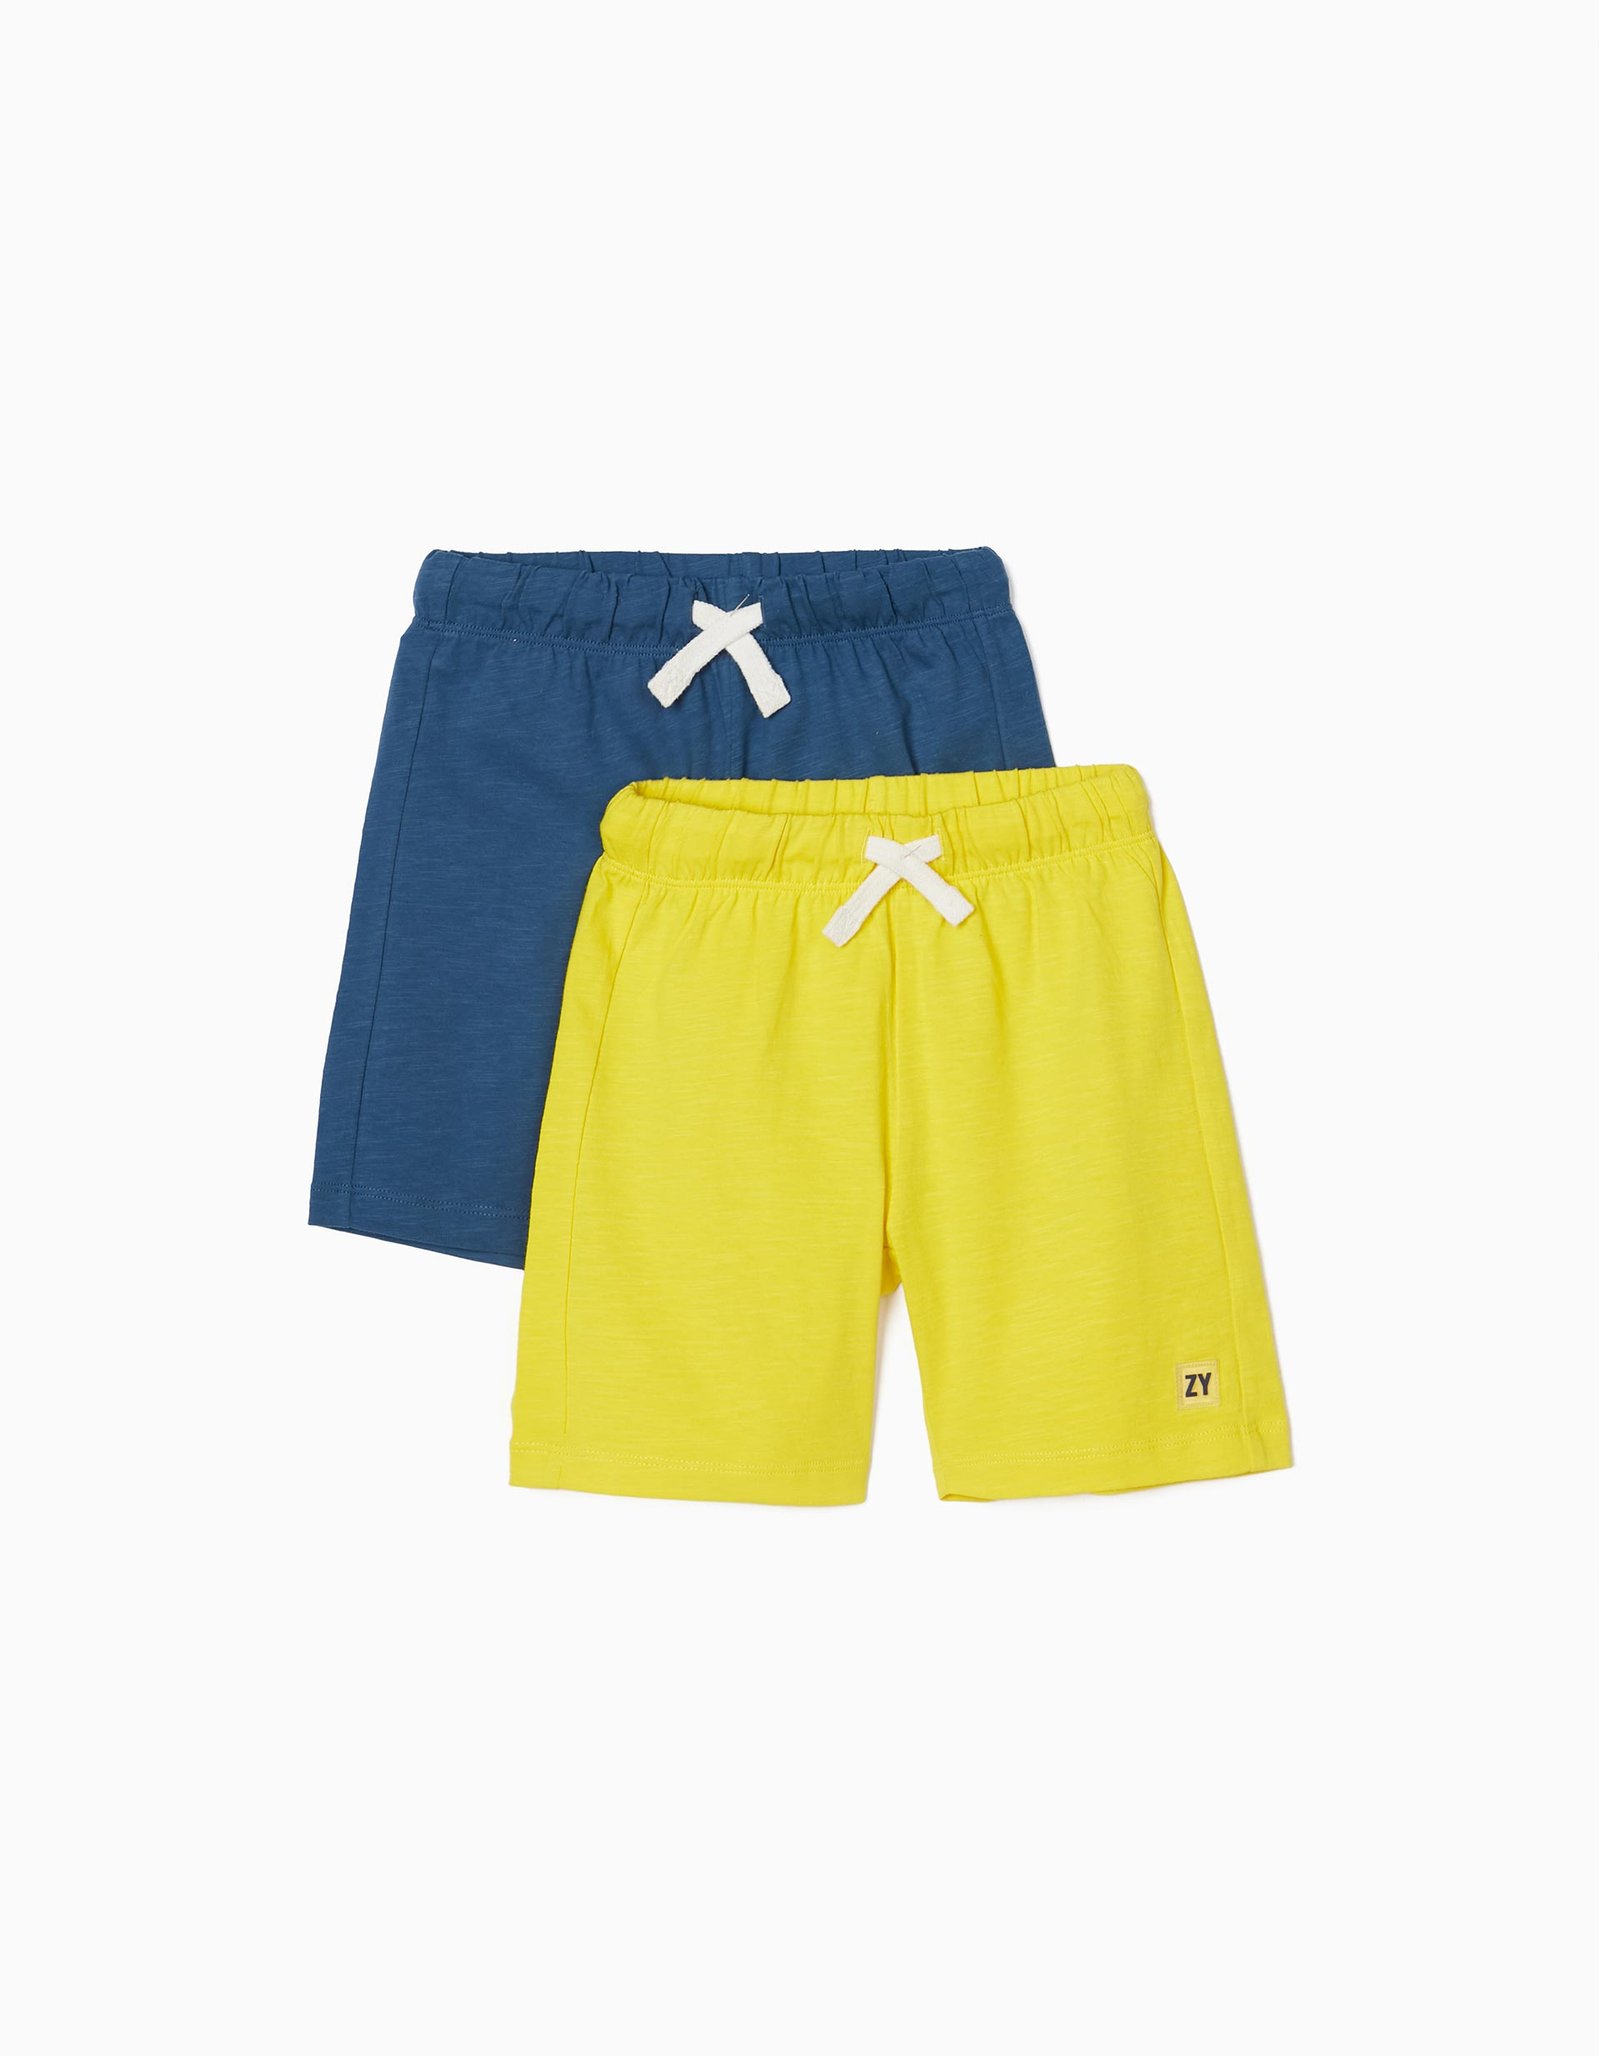 Conjunto camiseta + pantalón corto para niño Zone Set azul marino amarillo